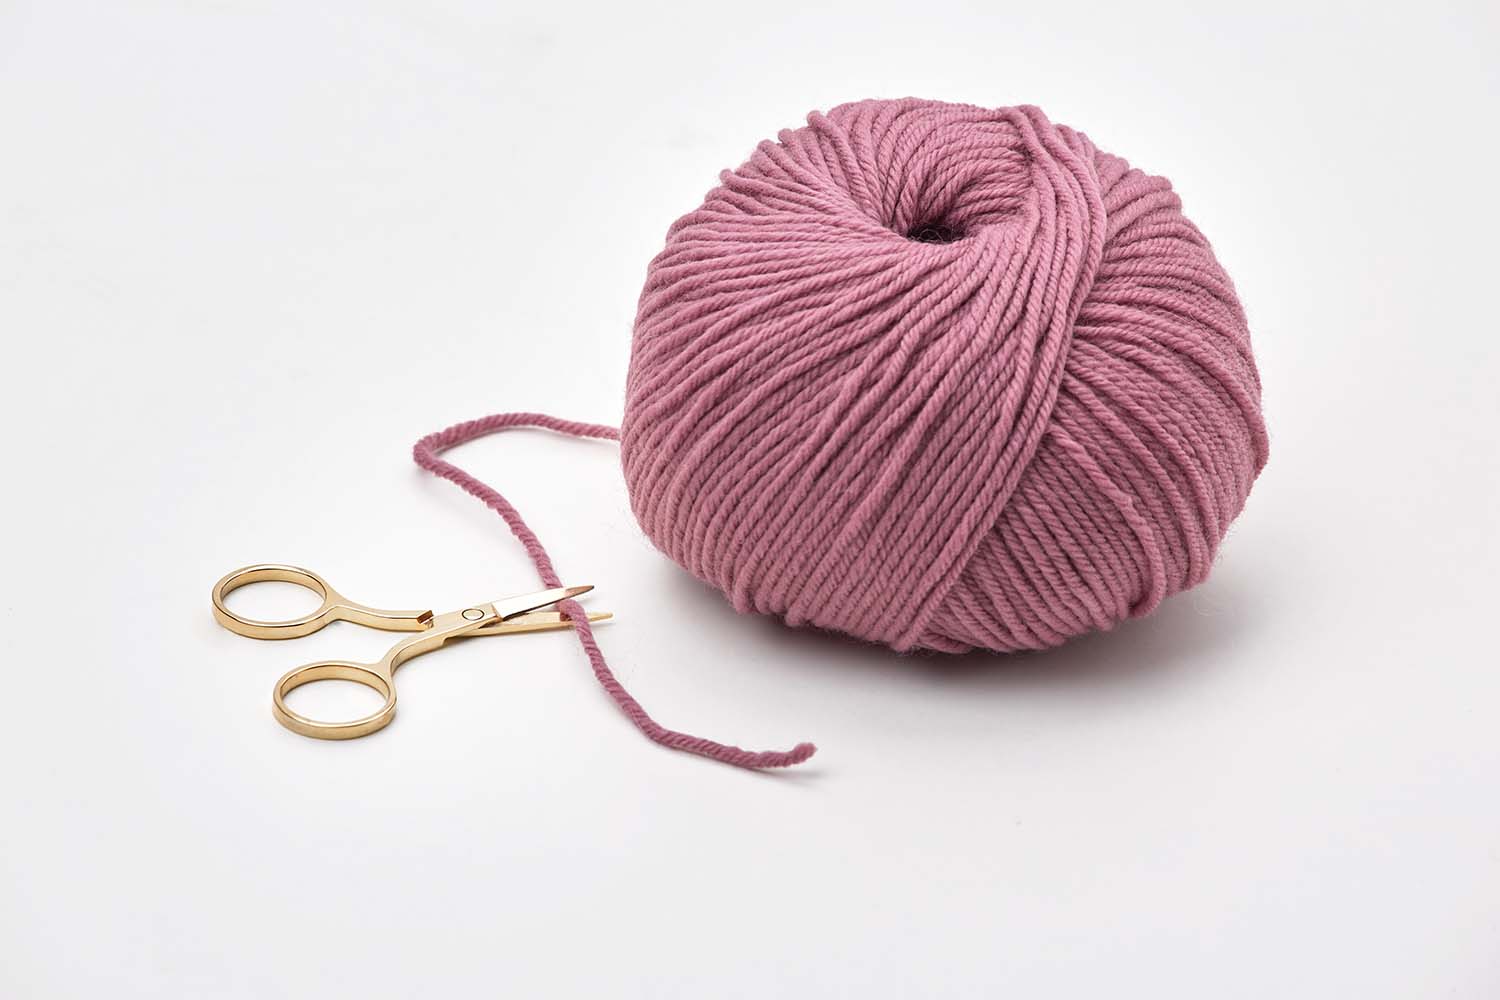 Crochet accessories, knitting accessories, needlework accessories